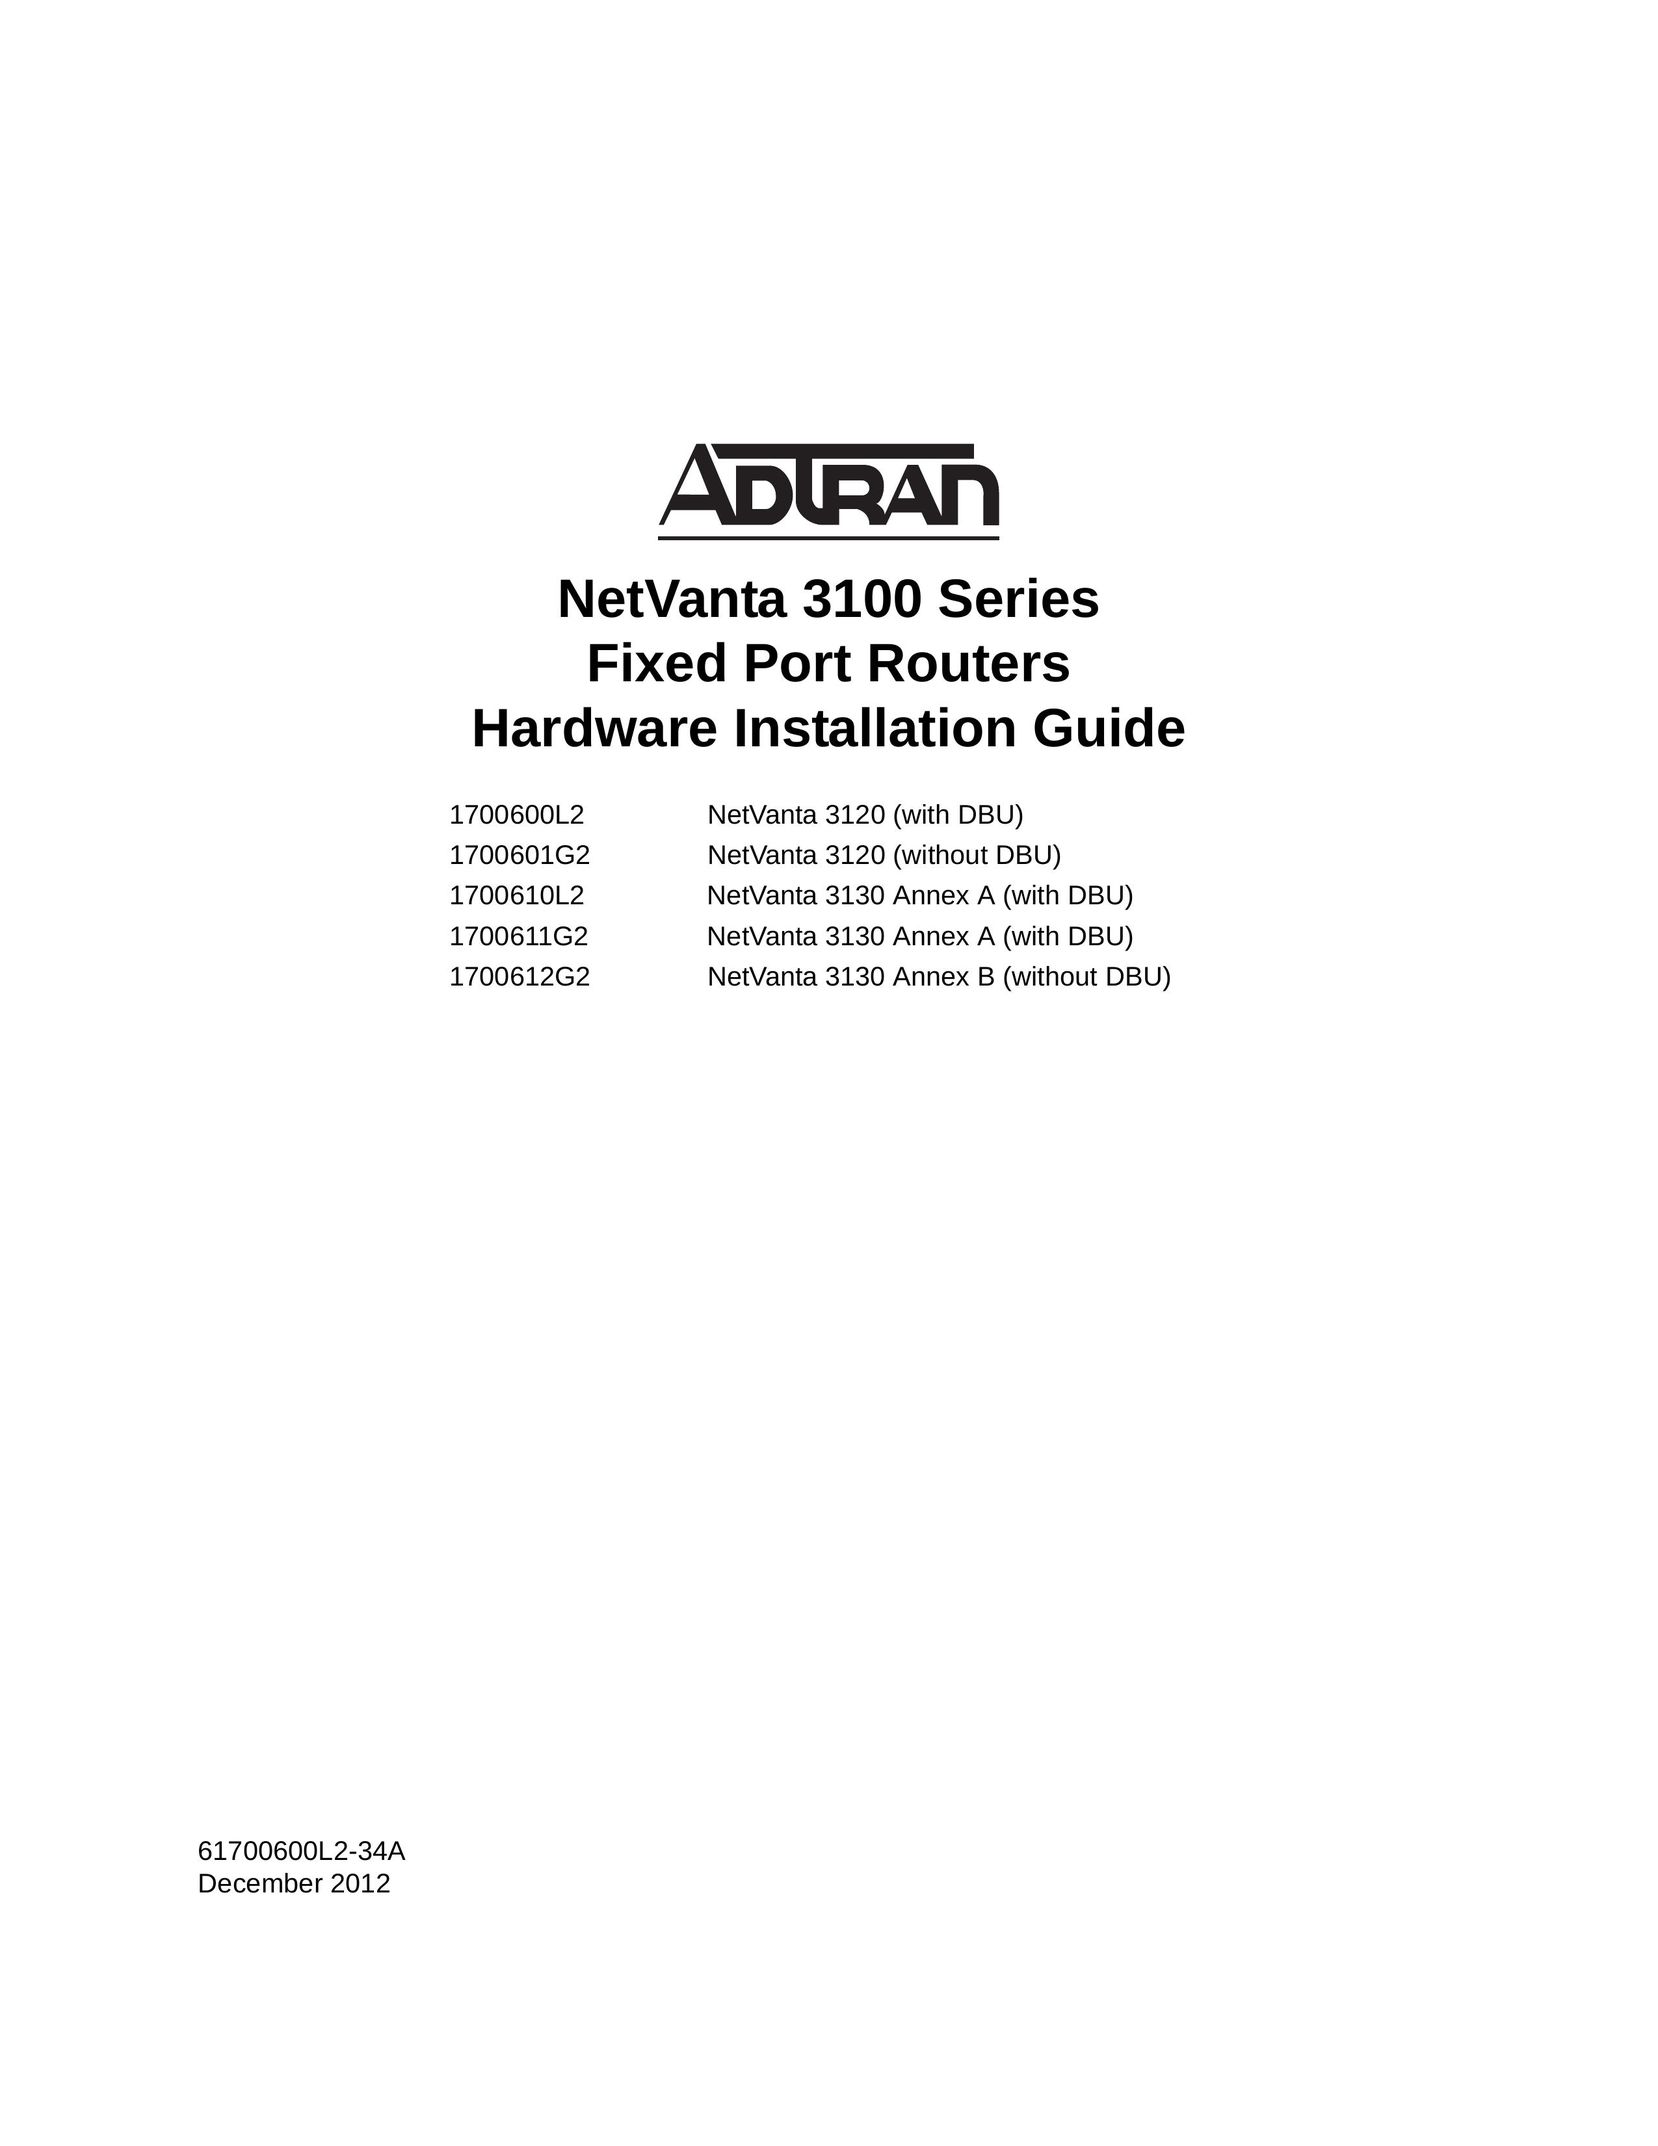 ADTRAN 1700611G2 Network Router User Manual